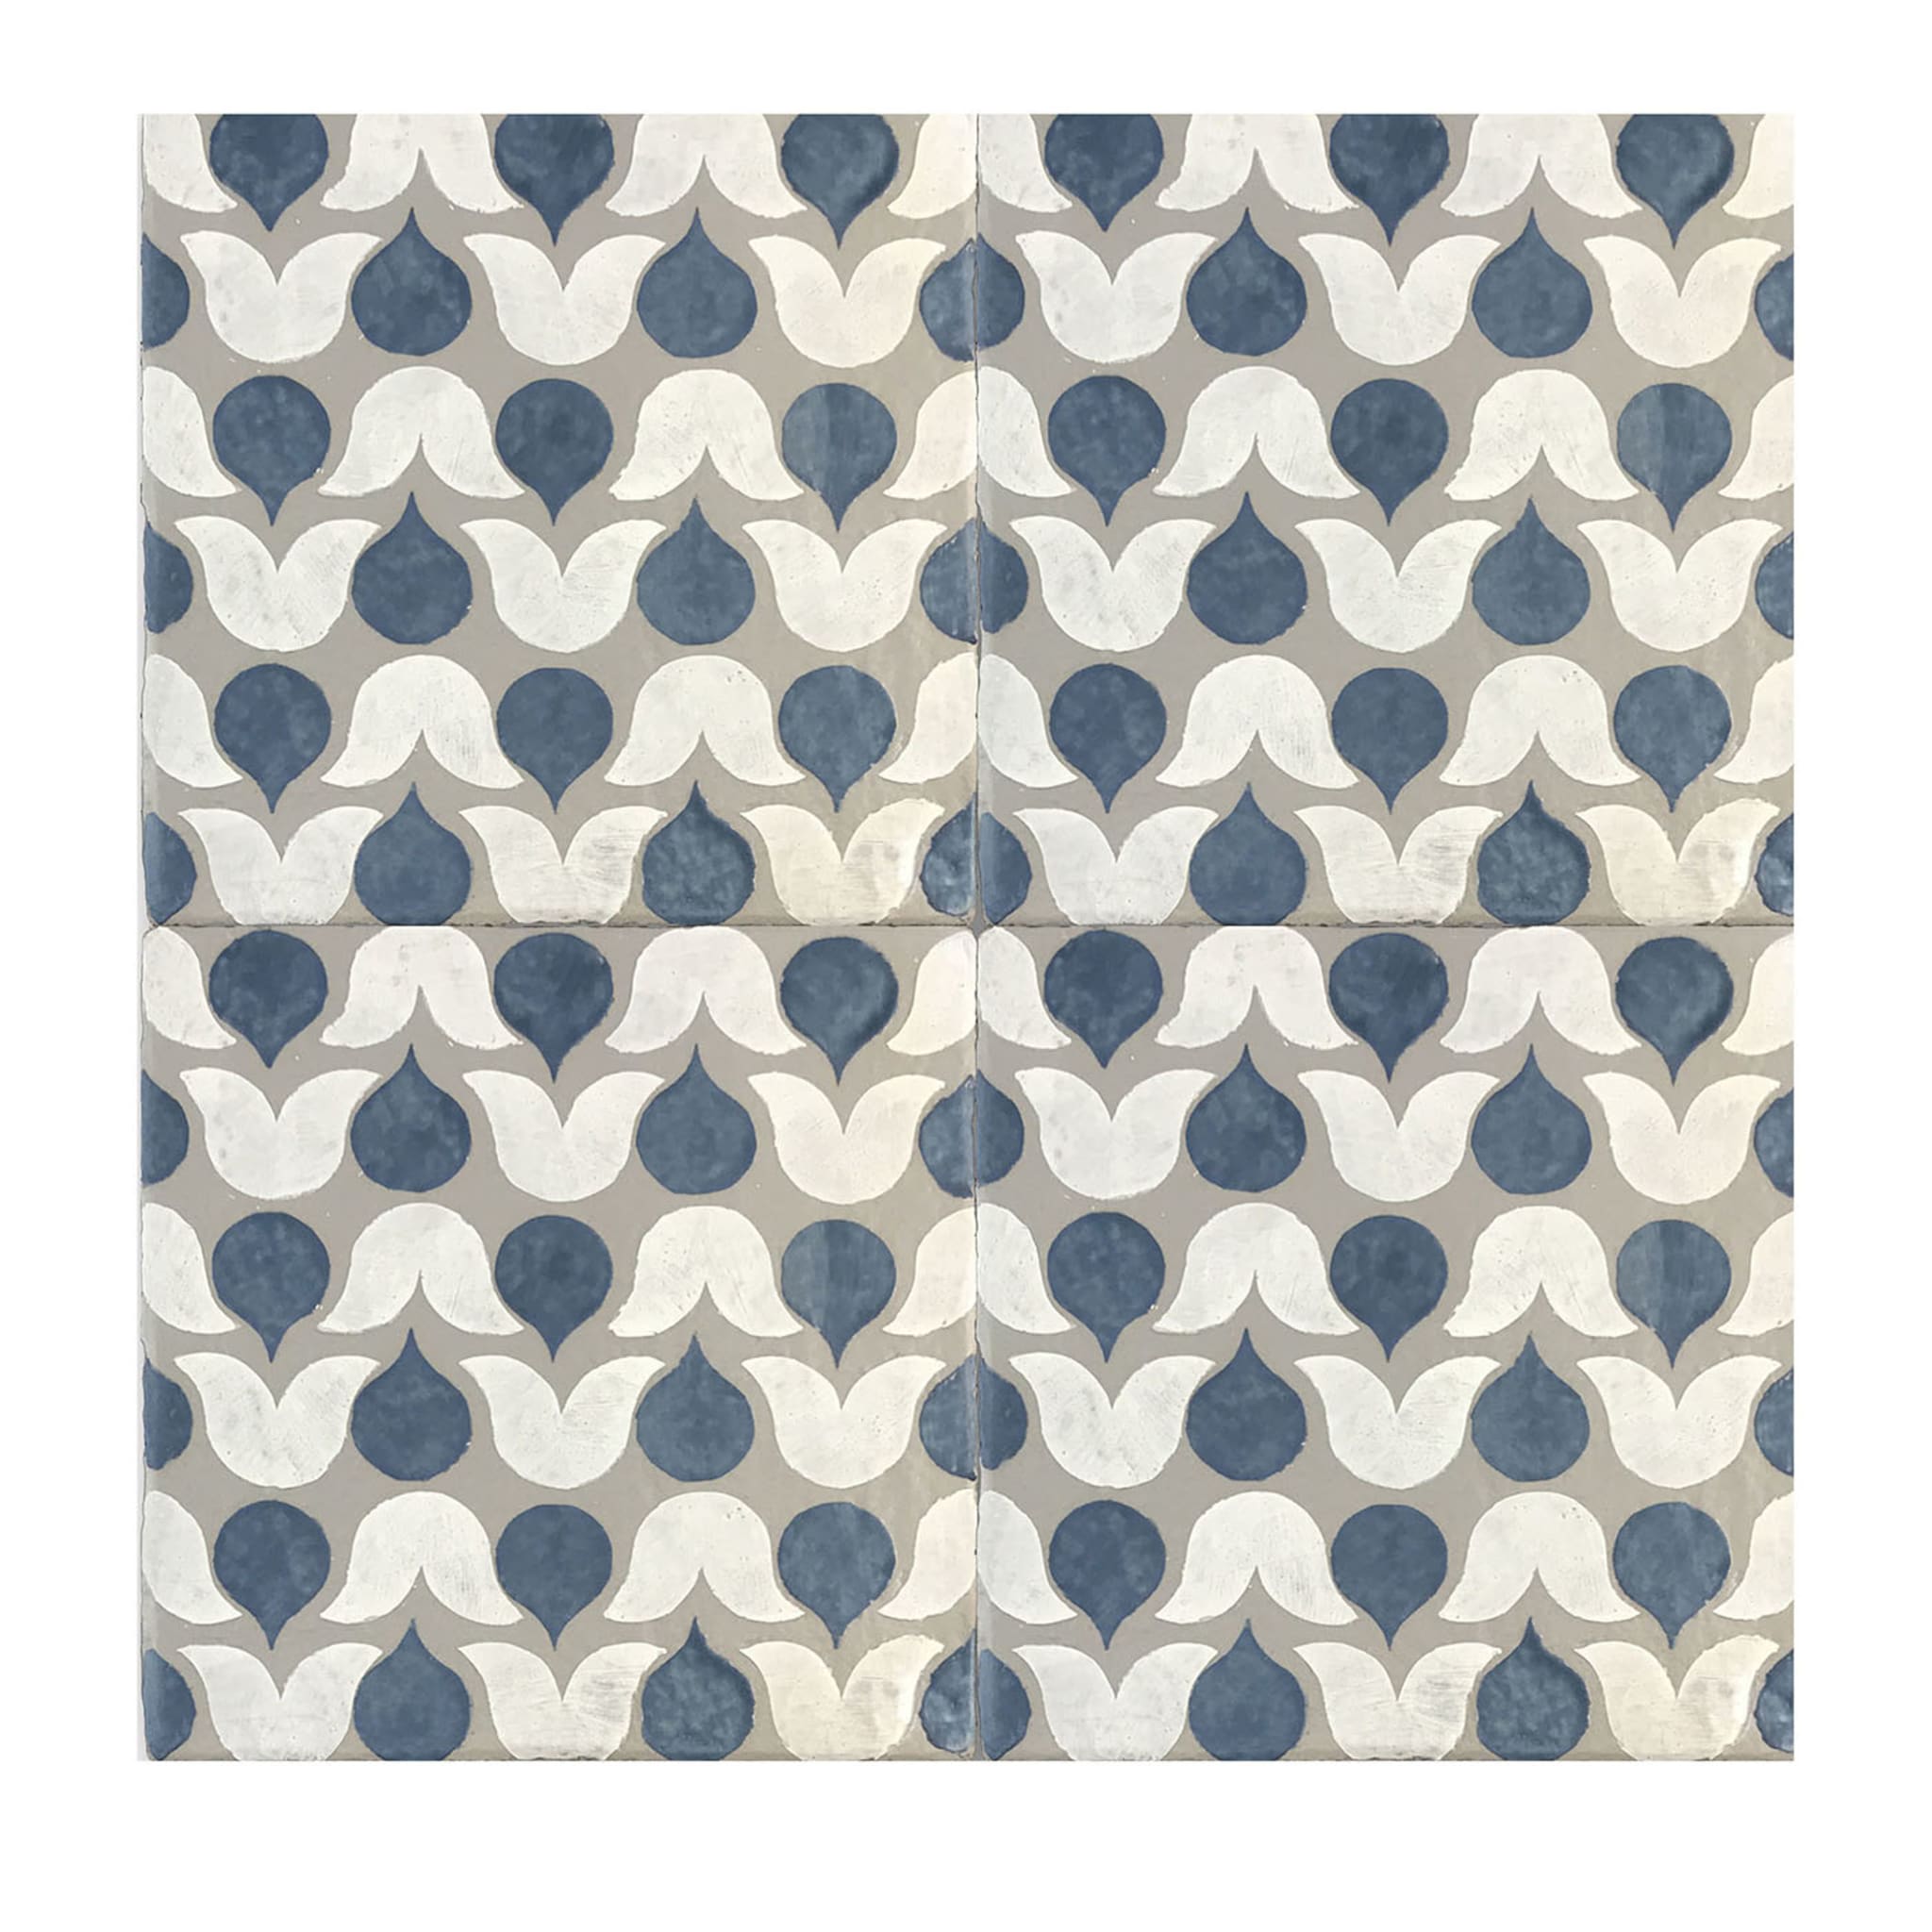 Daamè Set of 25 Square Ivory Tiles #2 - Main view